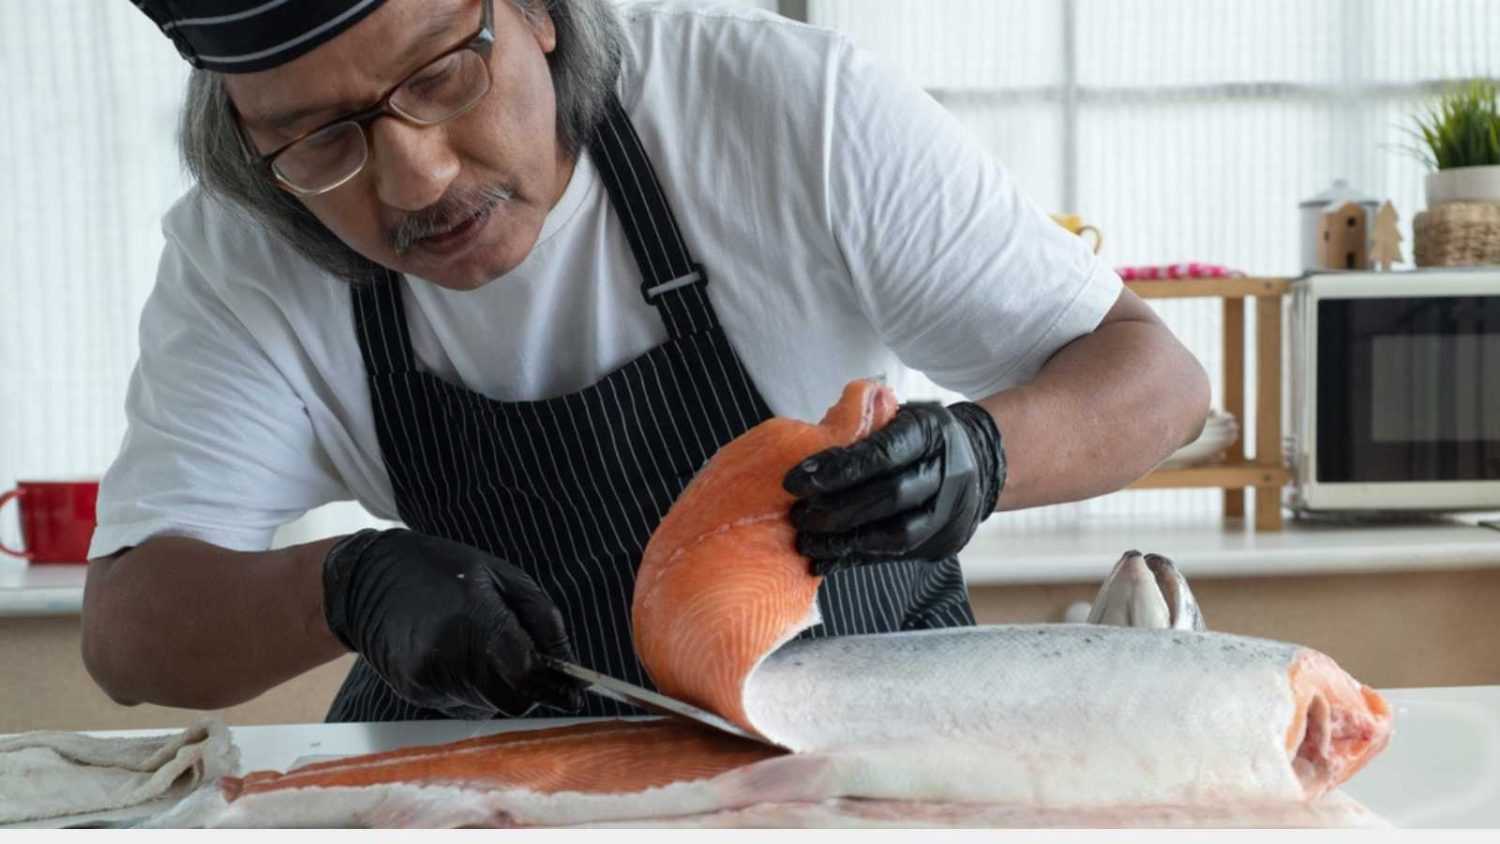 Senior chef use sharp knife slicing raw fresh salmon fillet for sashimi and sushi in modern kitchen